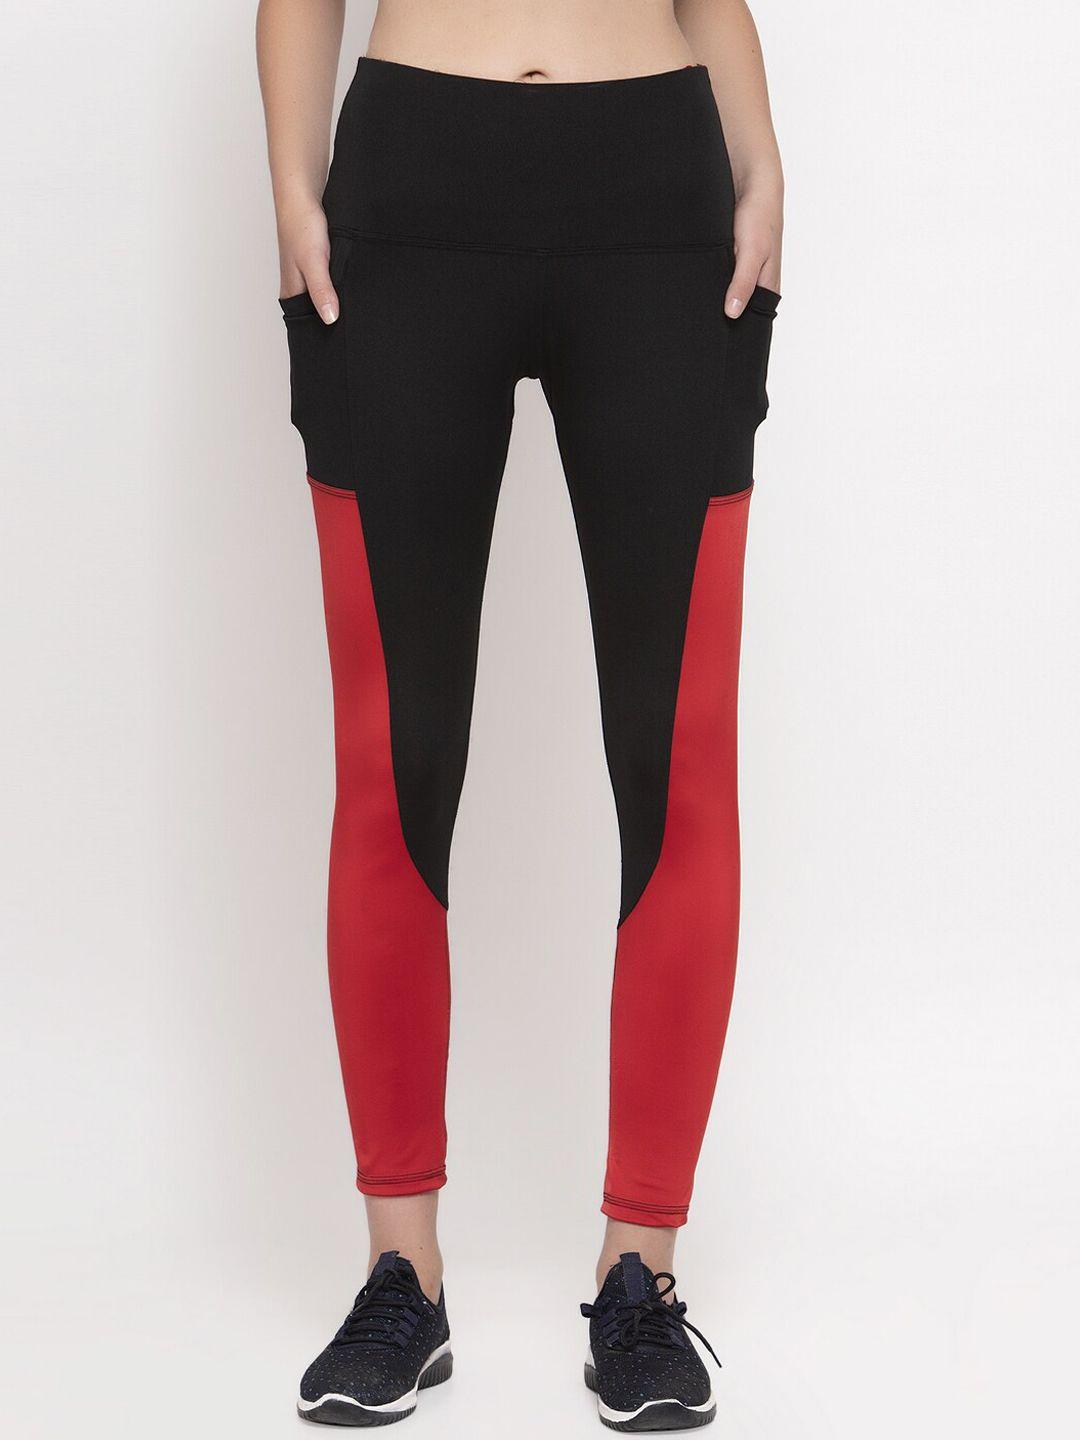 cukoo women red & black colourblocked tights